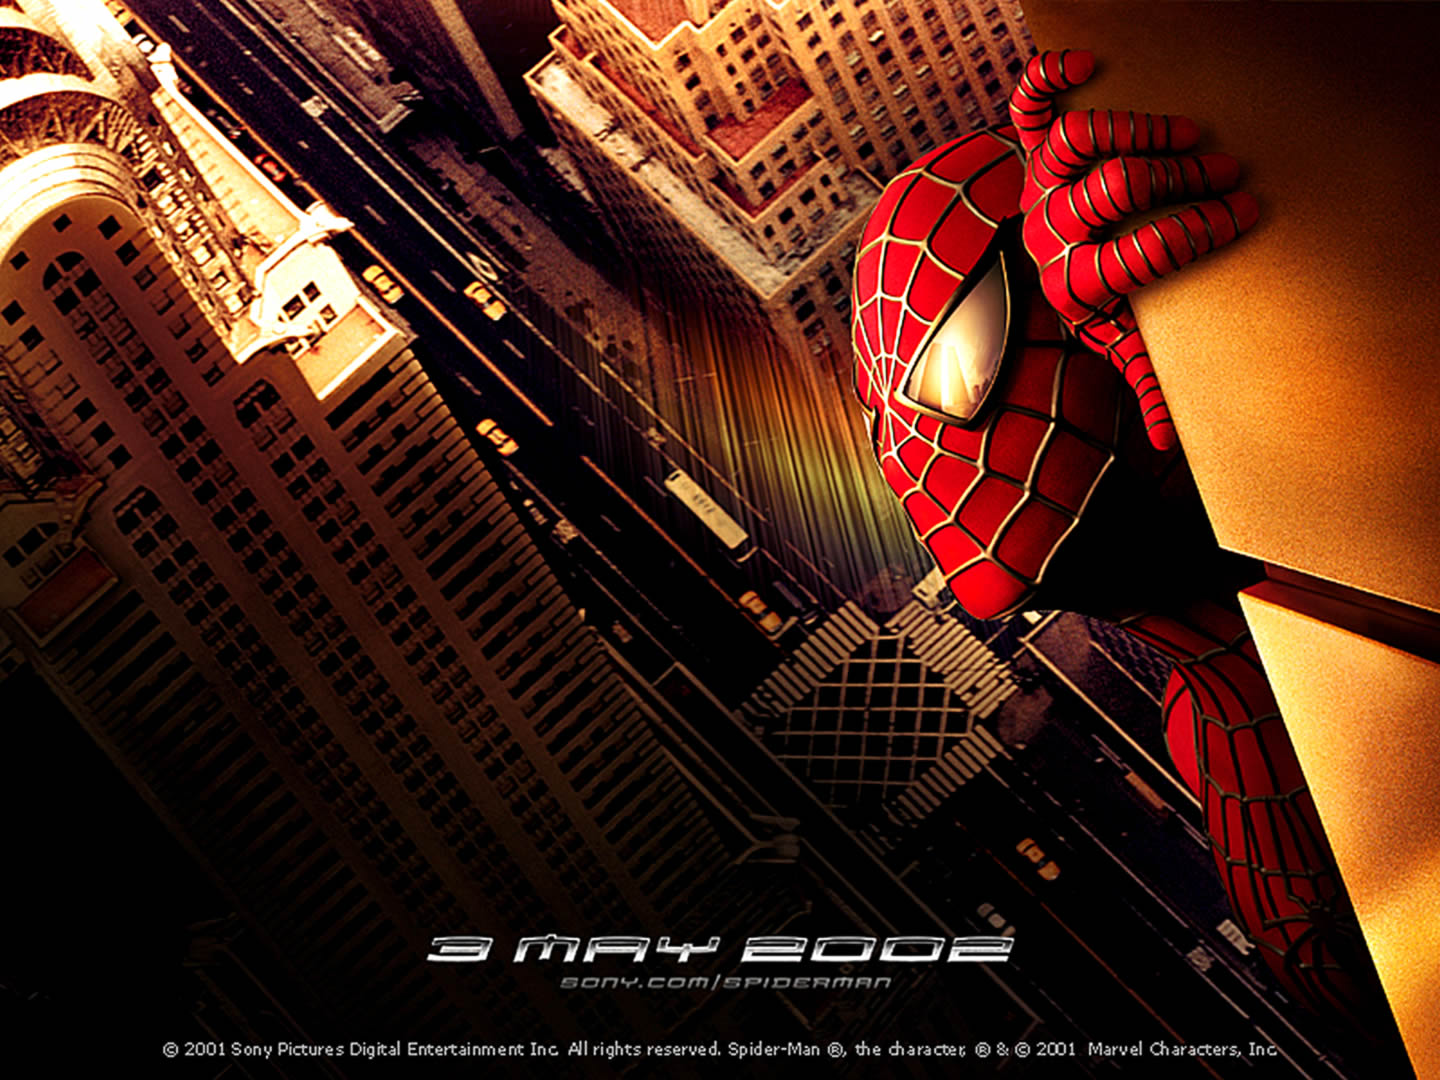 SPIDER MAN WTC TEASER - Superhero Movie Posters